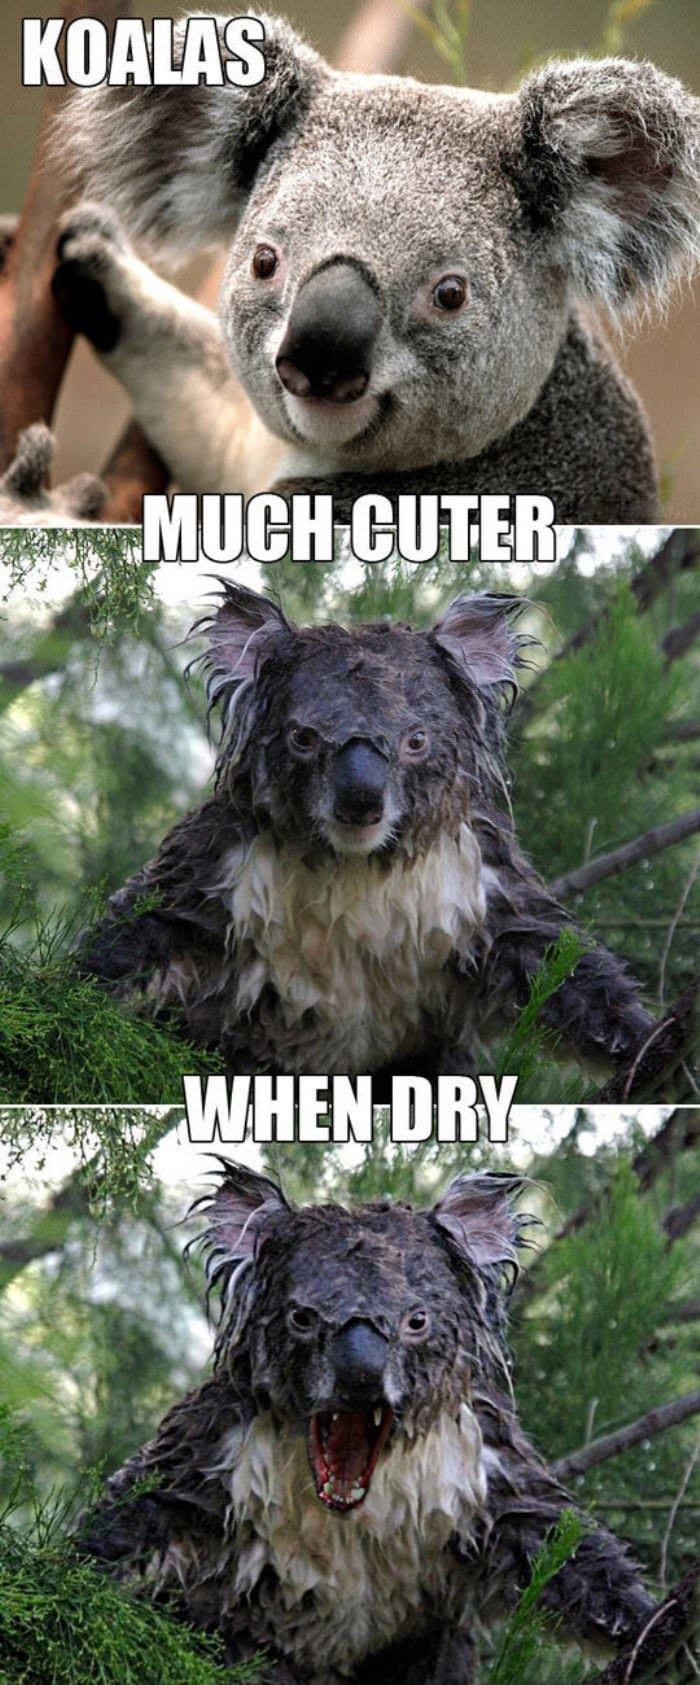 koalas funny picture